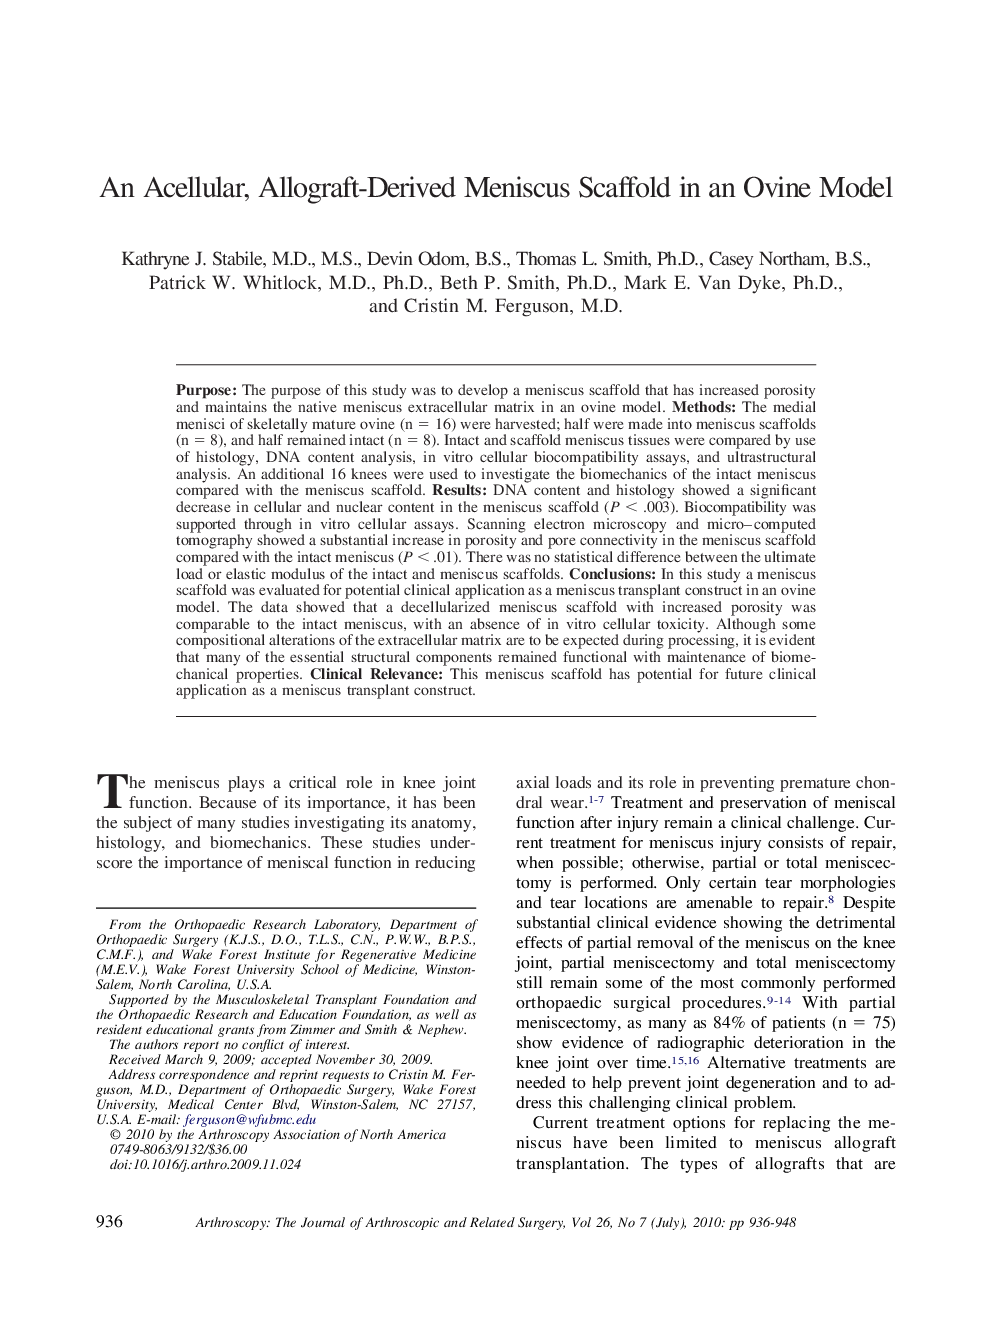 An Acellular, Allograft-Derived Meniscus Scaffold in an Ovine Model 